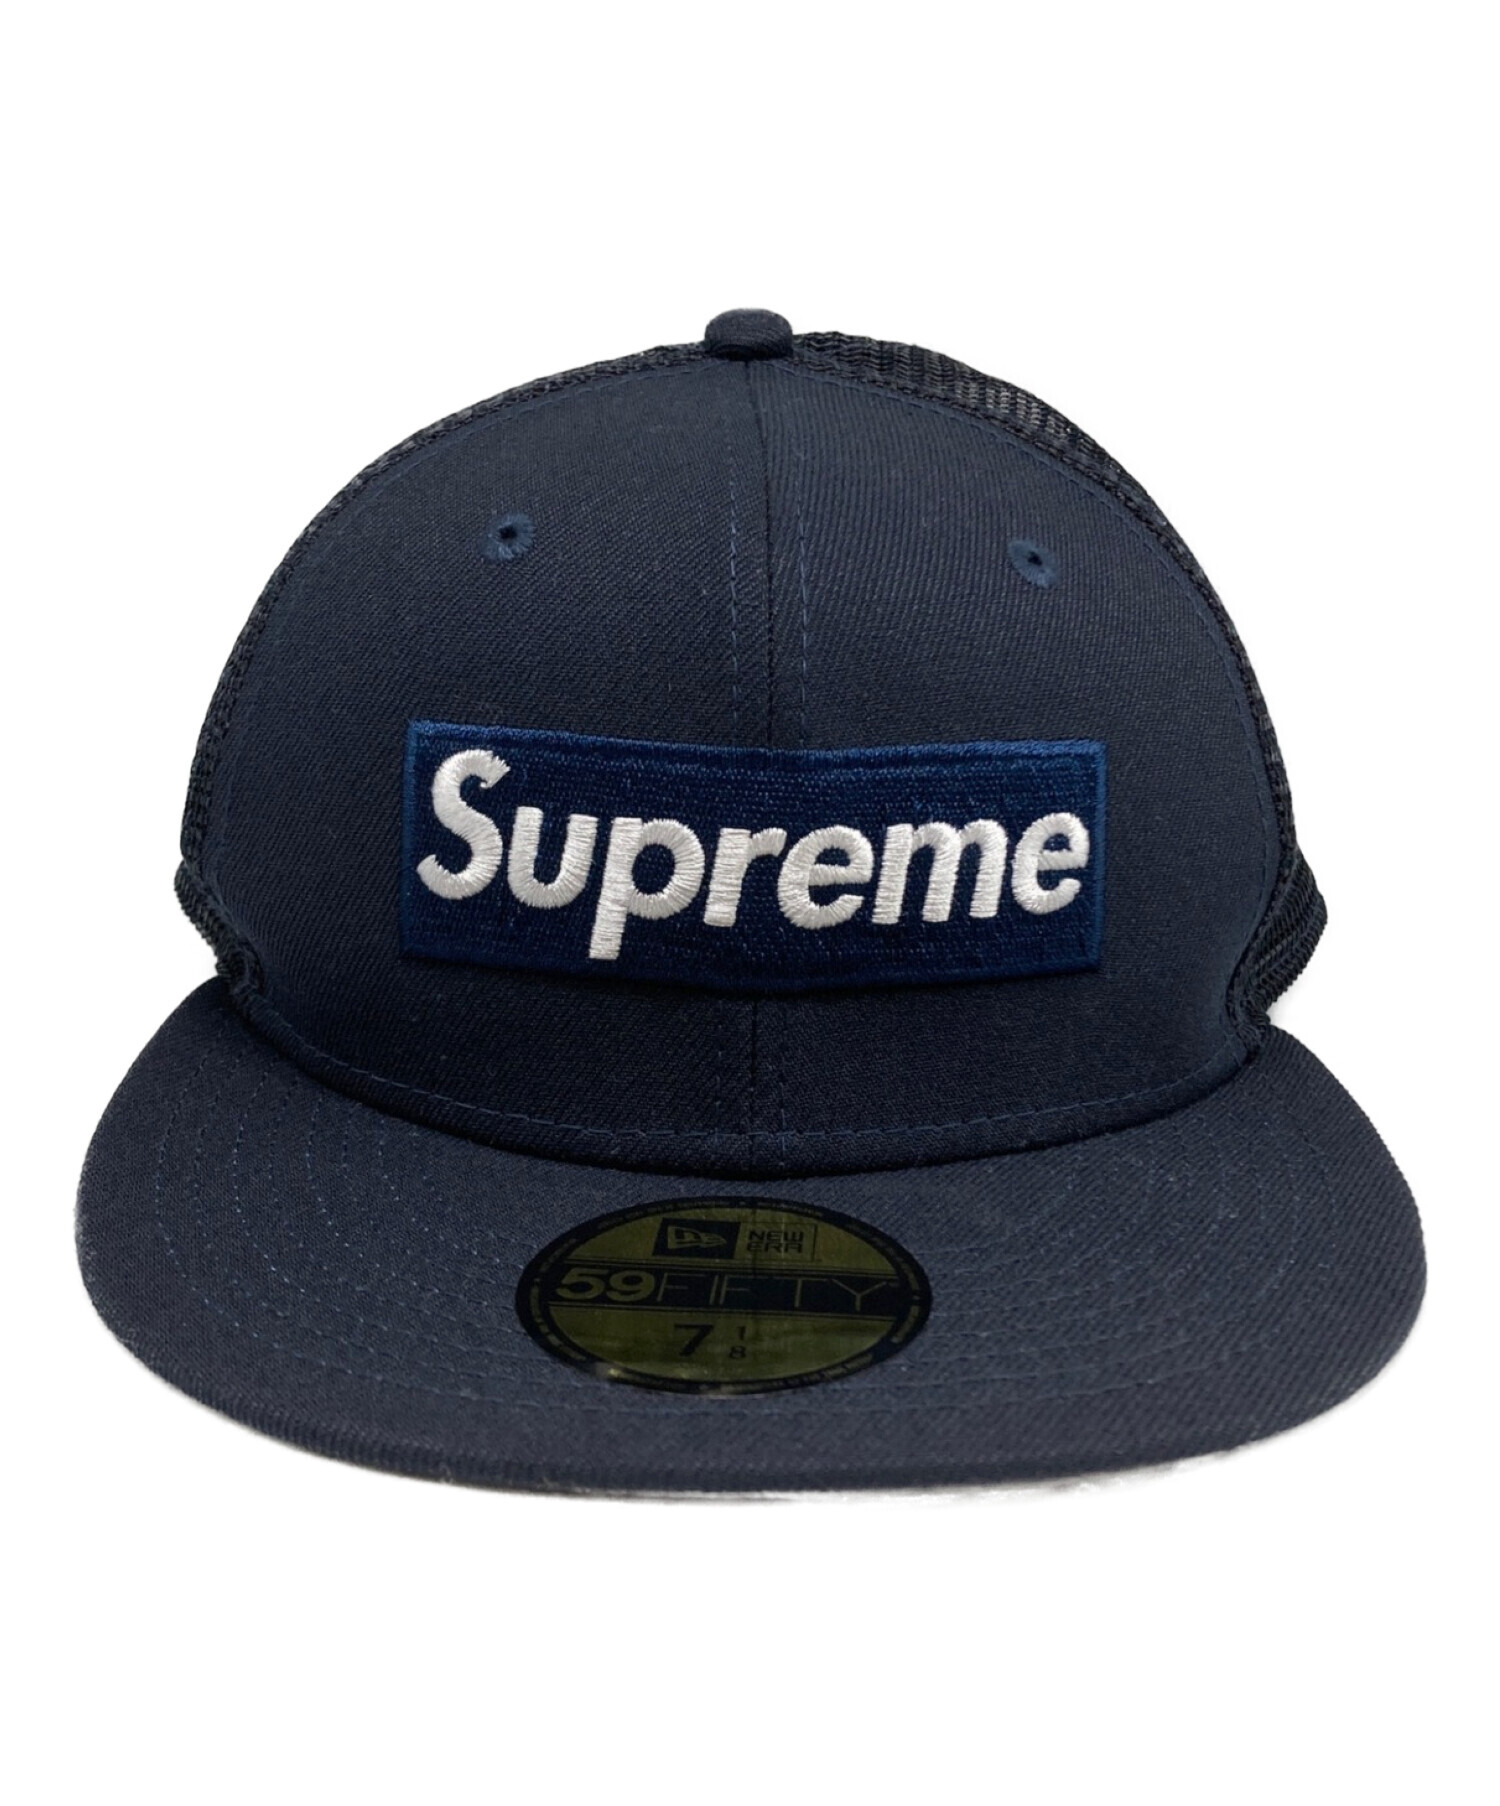 Supreme new era cap 2016